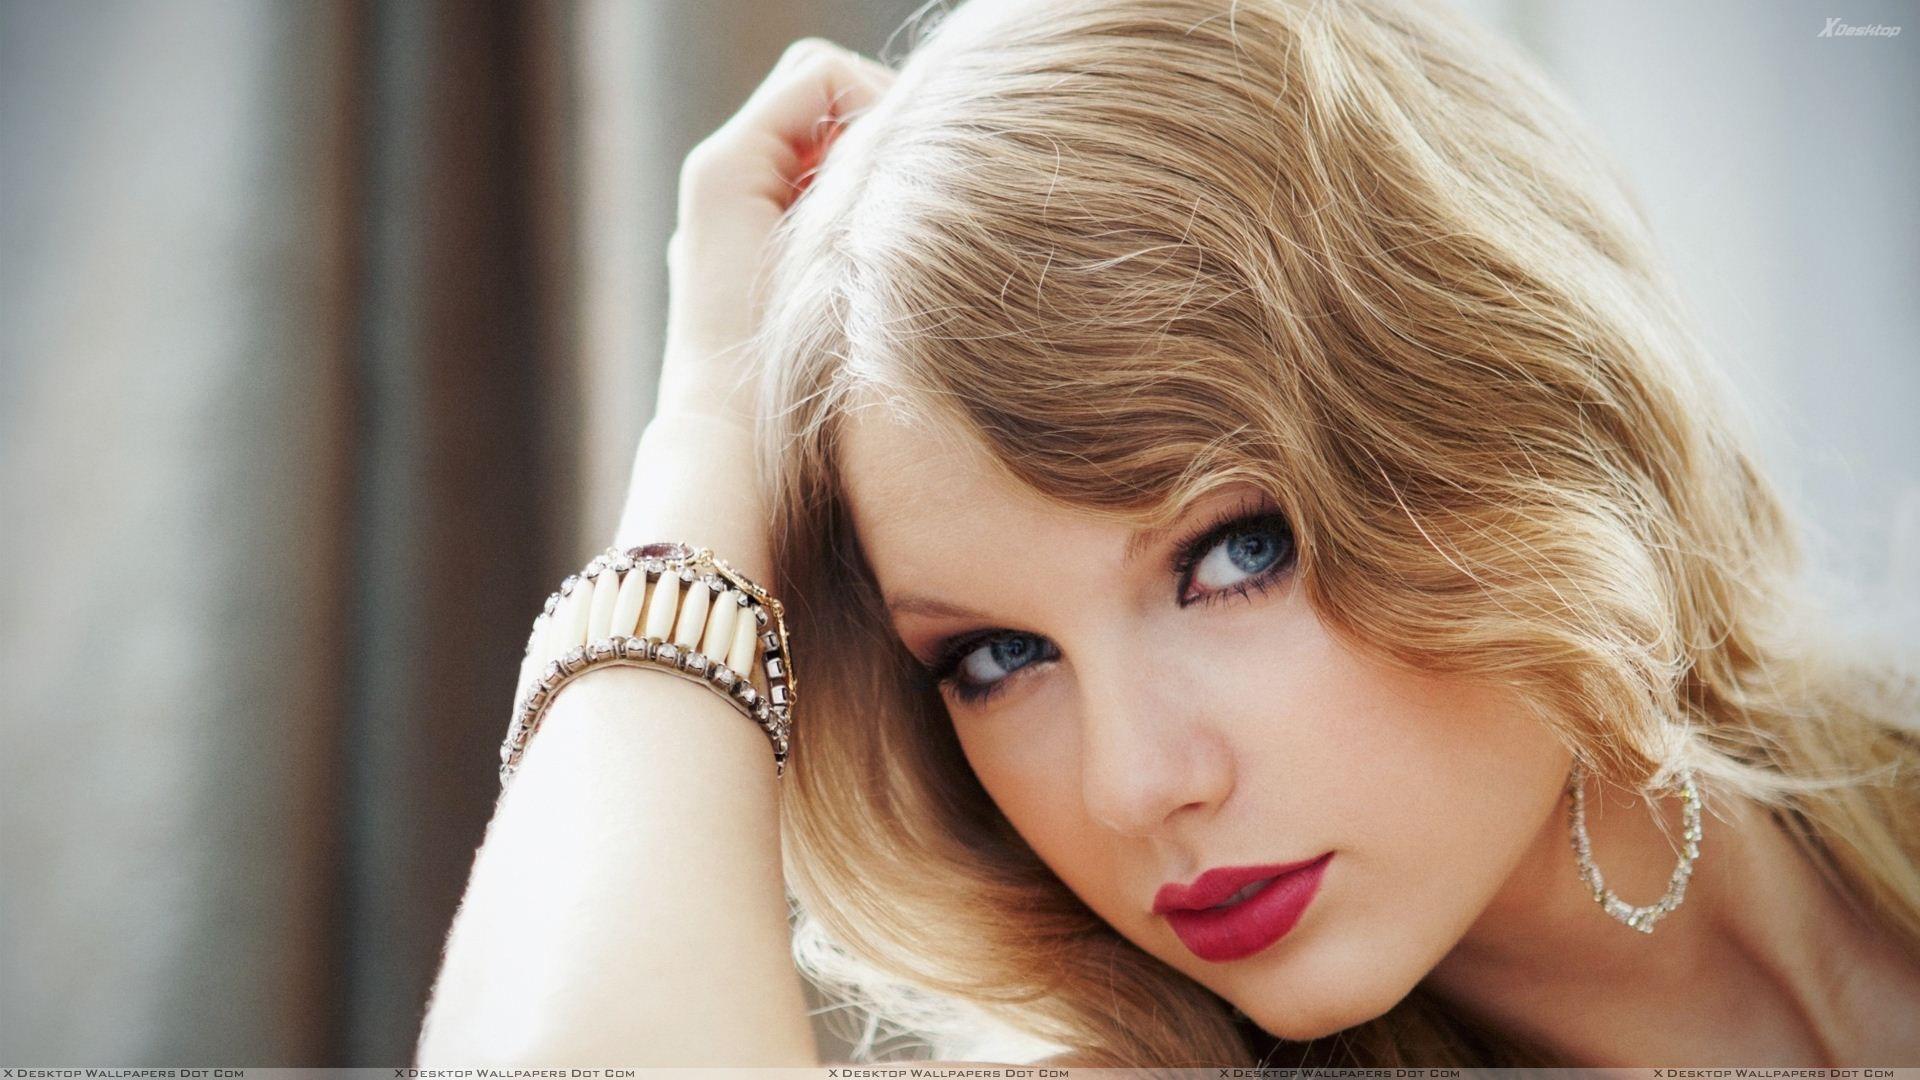 Taylor Swift Wallpaper, Photo & Image in HD